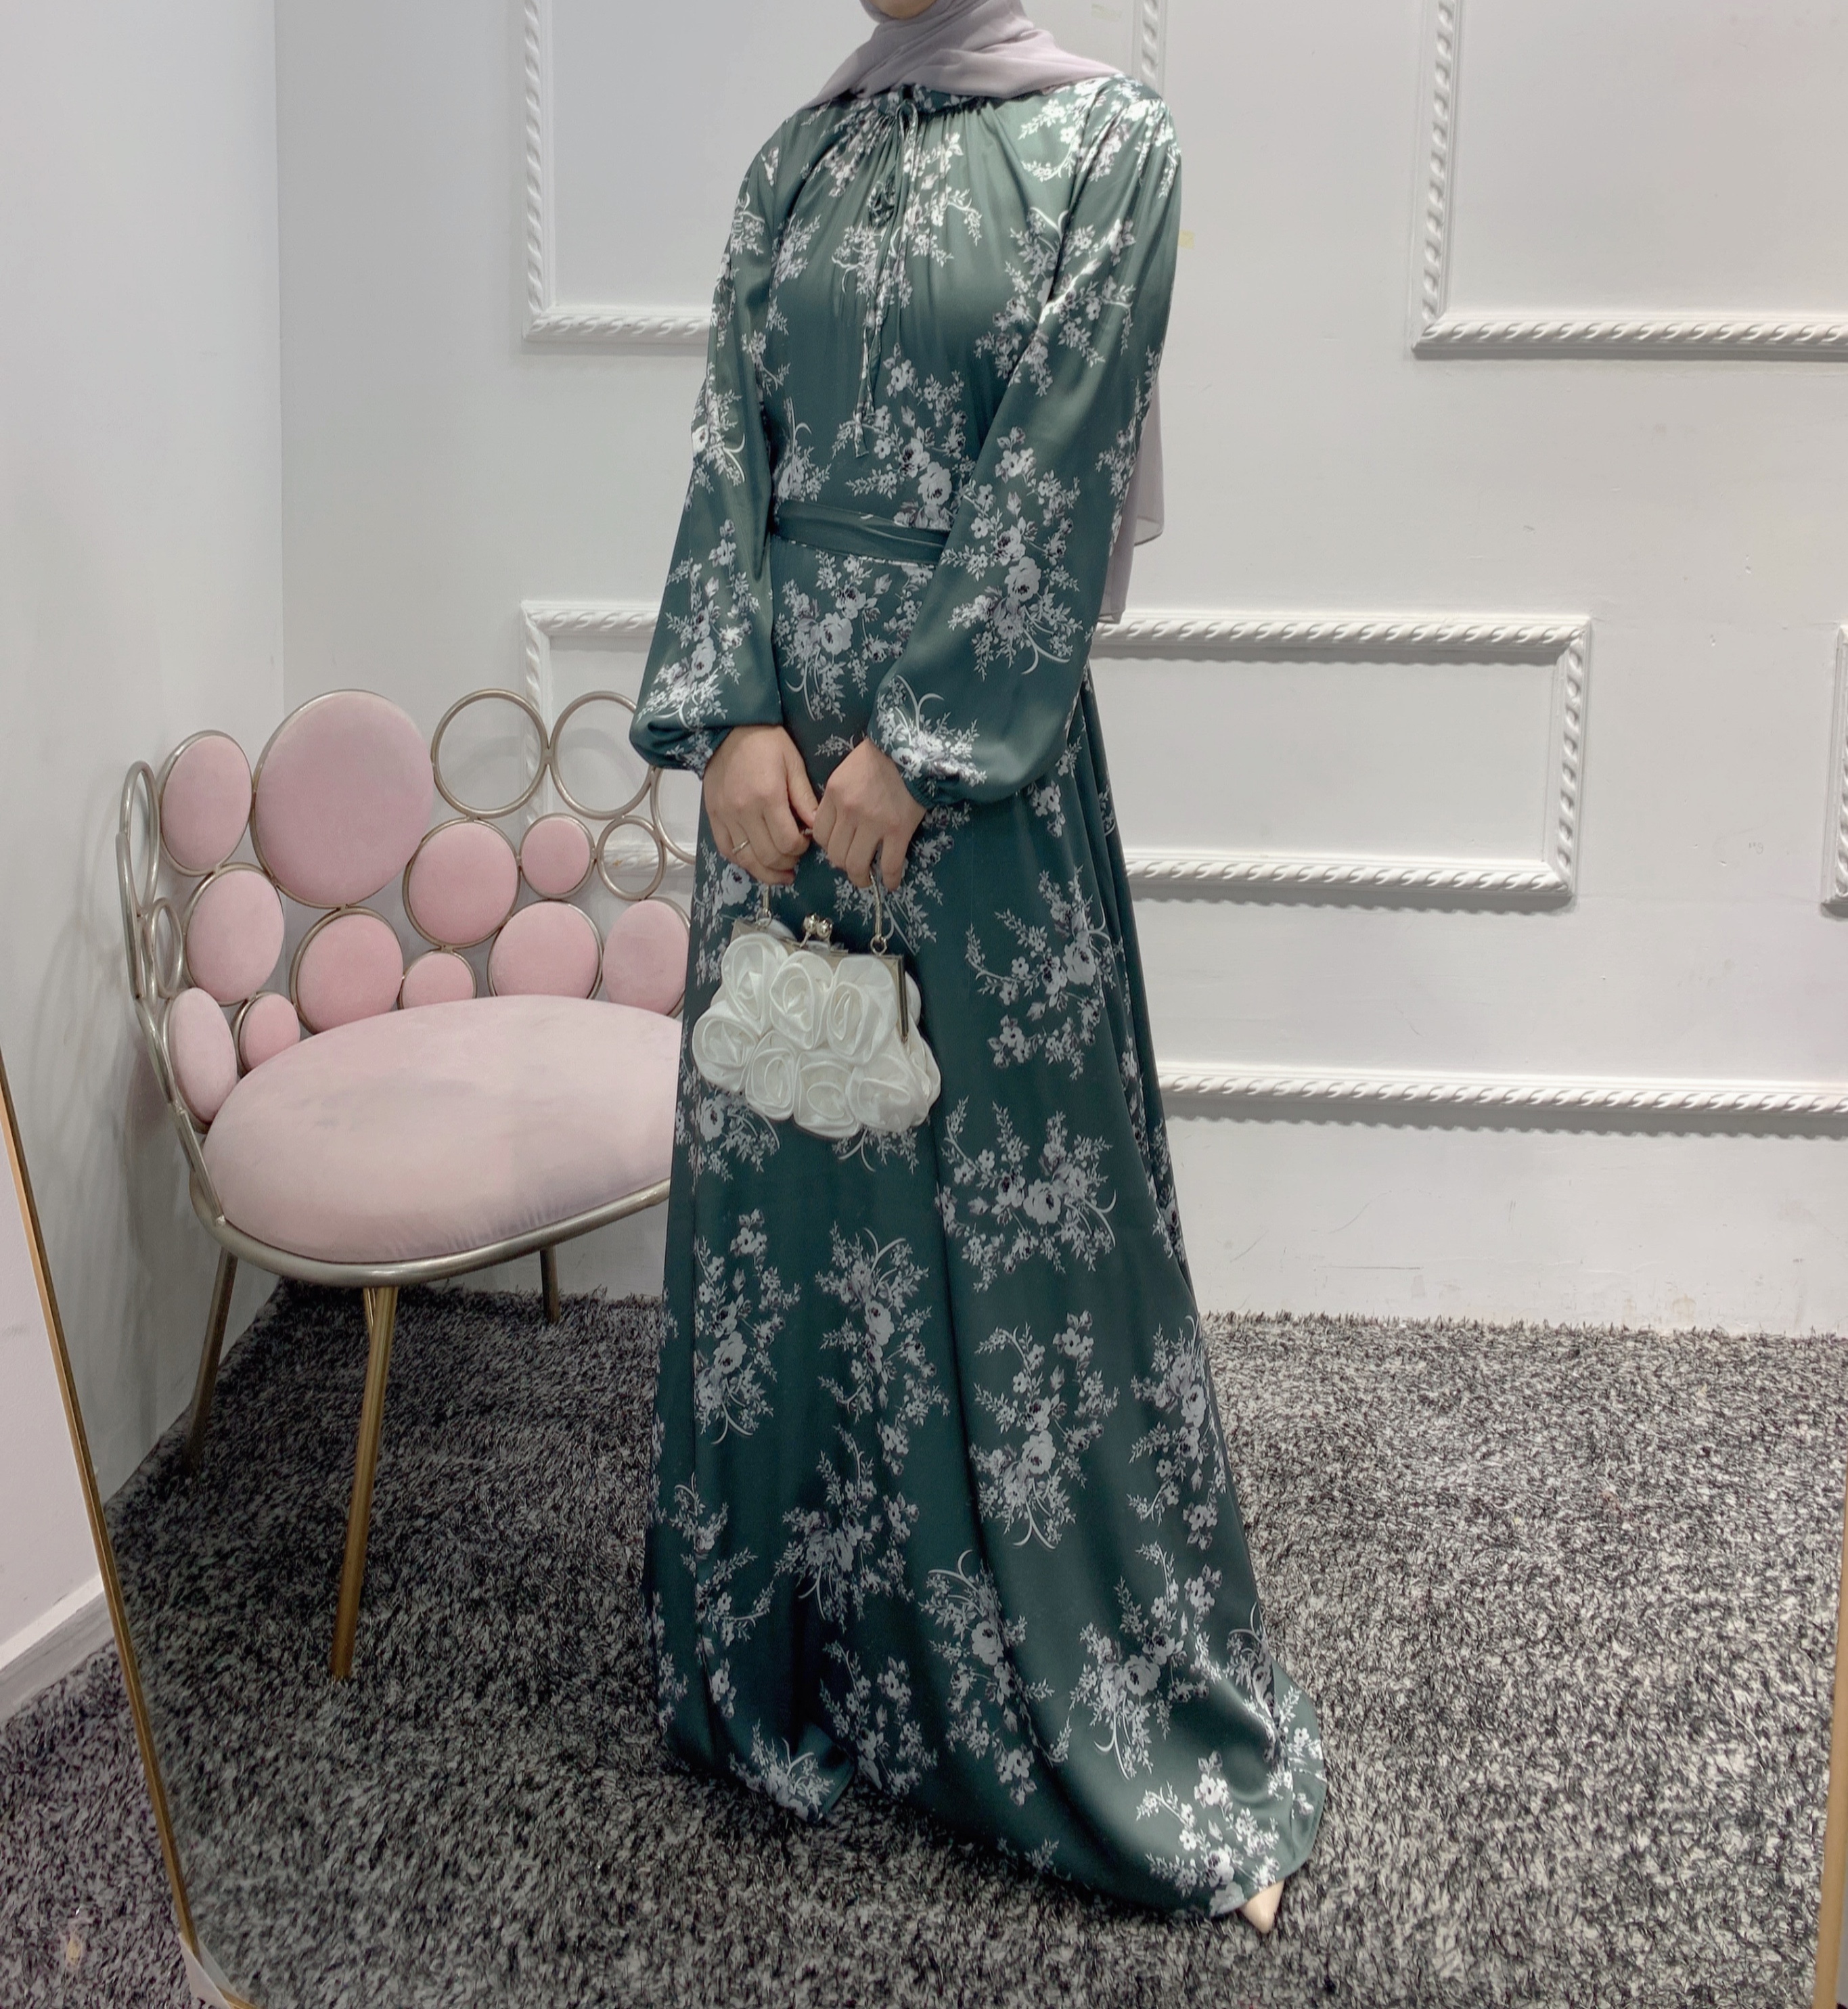 2021 Dec New High Quality Islamic Clothing Floral print Satin Abaya Muslim Women Elegant Dress In stock